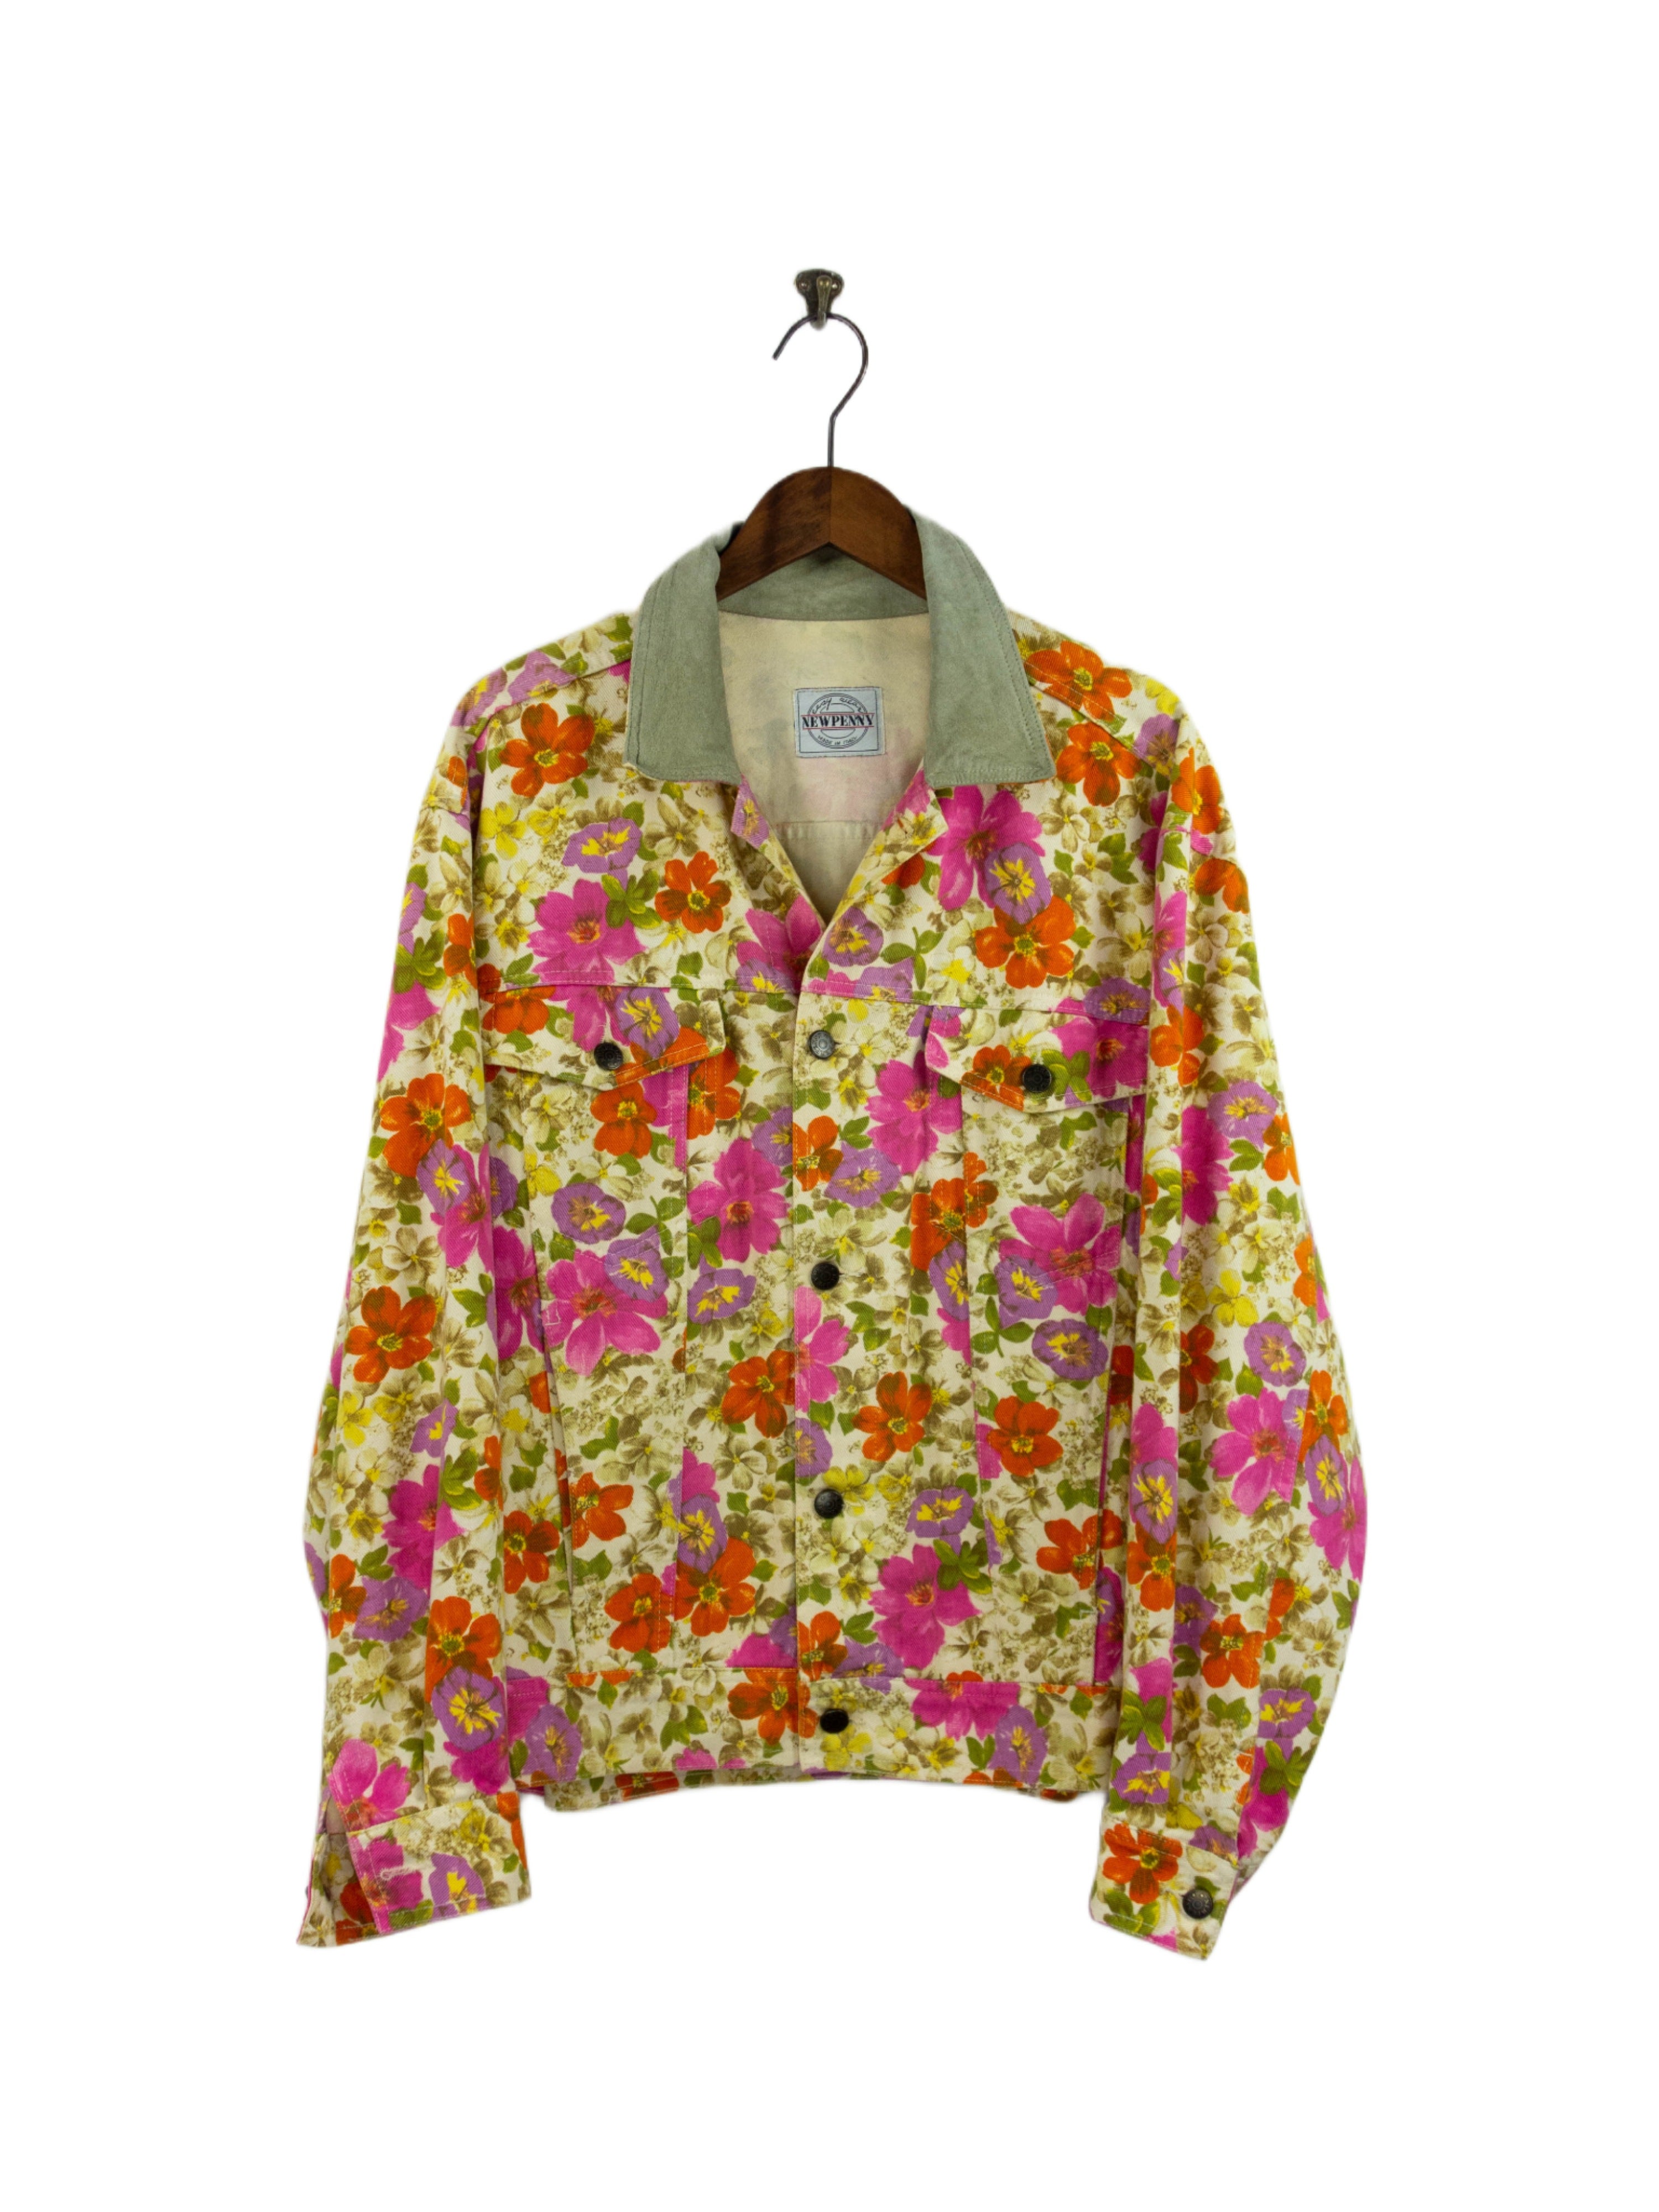 Jeansjacke mit floralem Muster L/XL